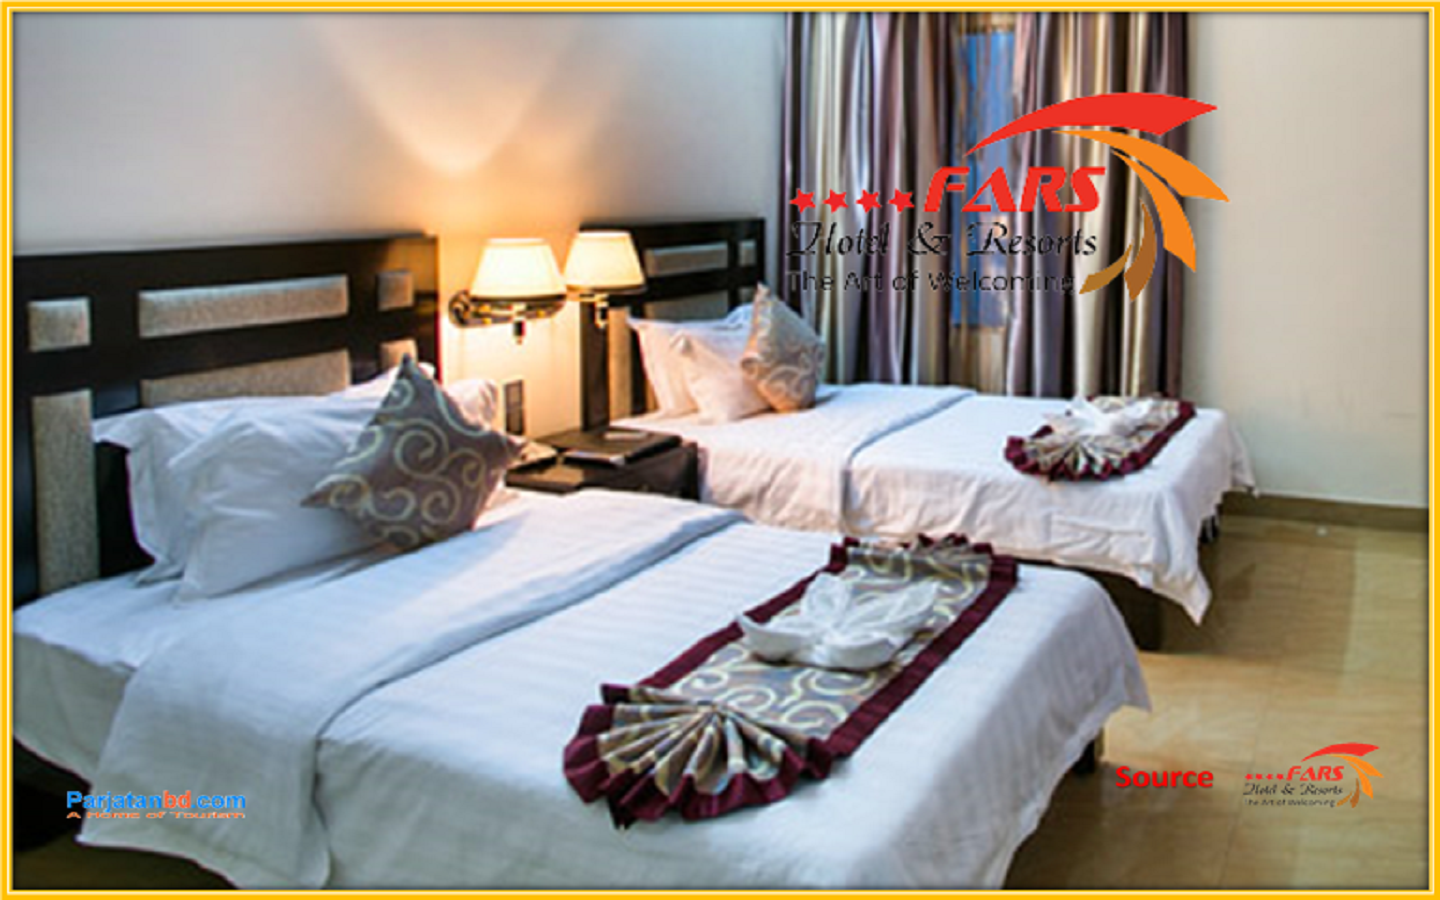 Room Deluxe Twin -1, FARS Hotel & Resorts, Bijonagar